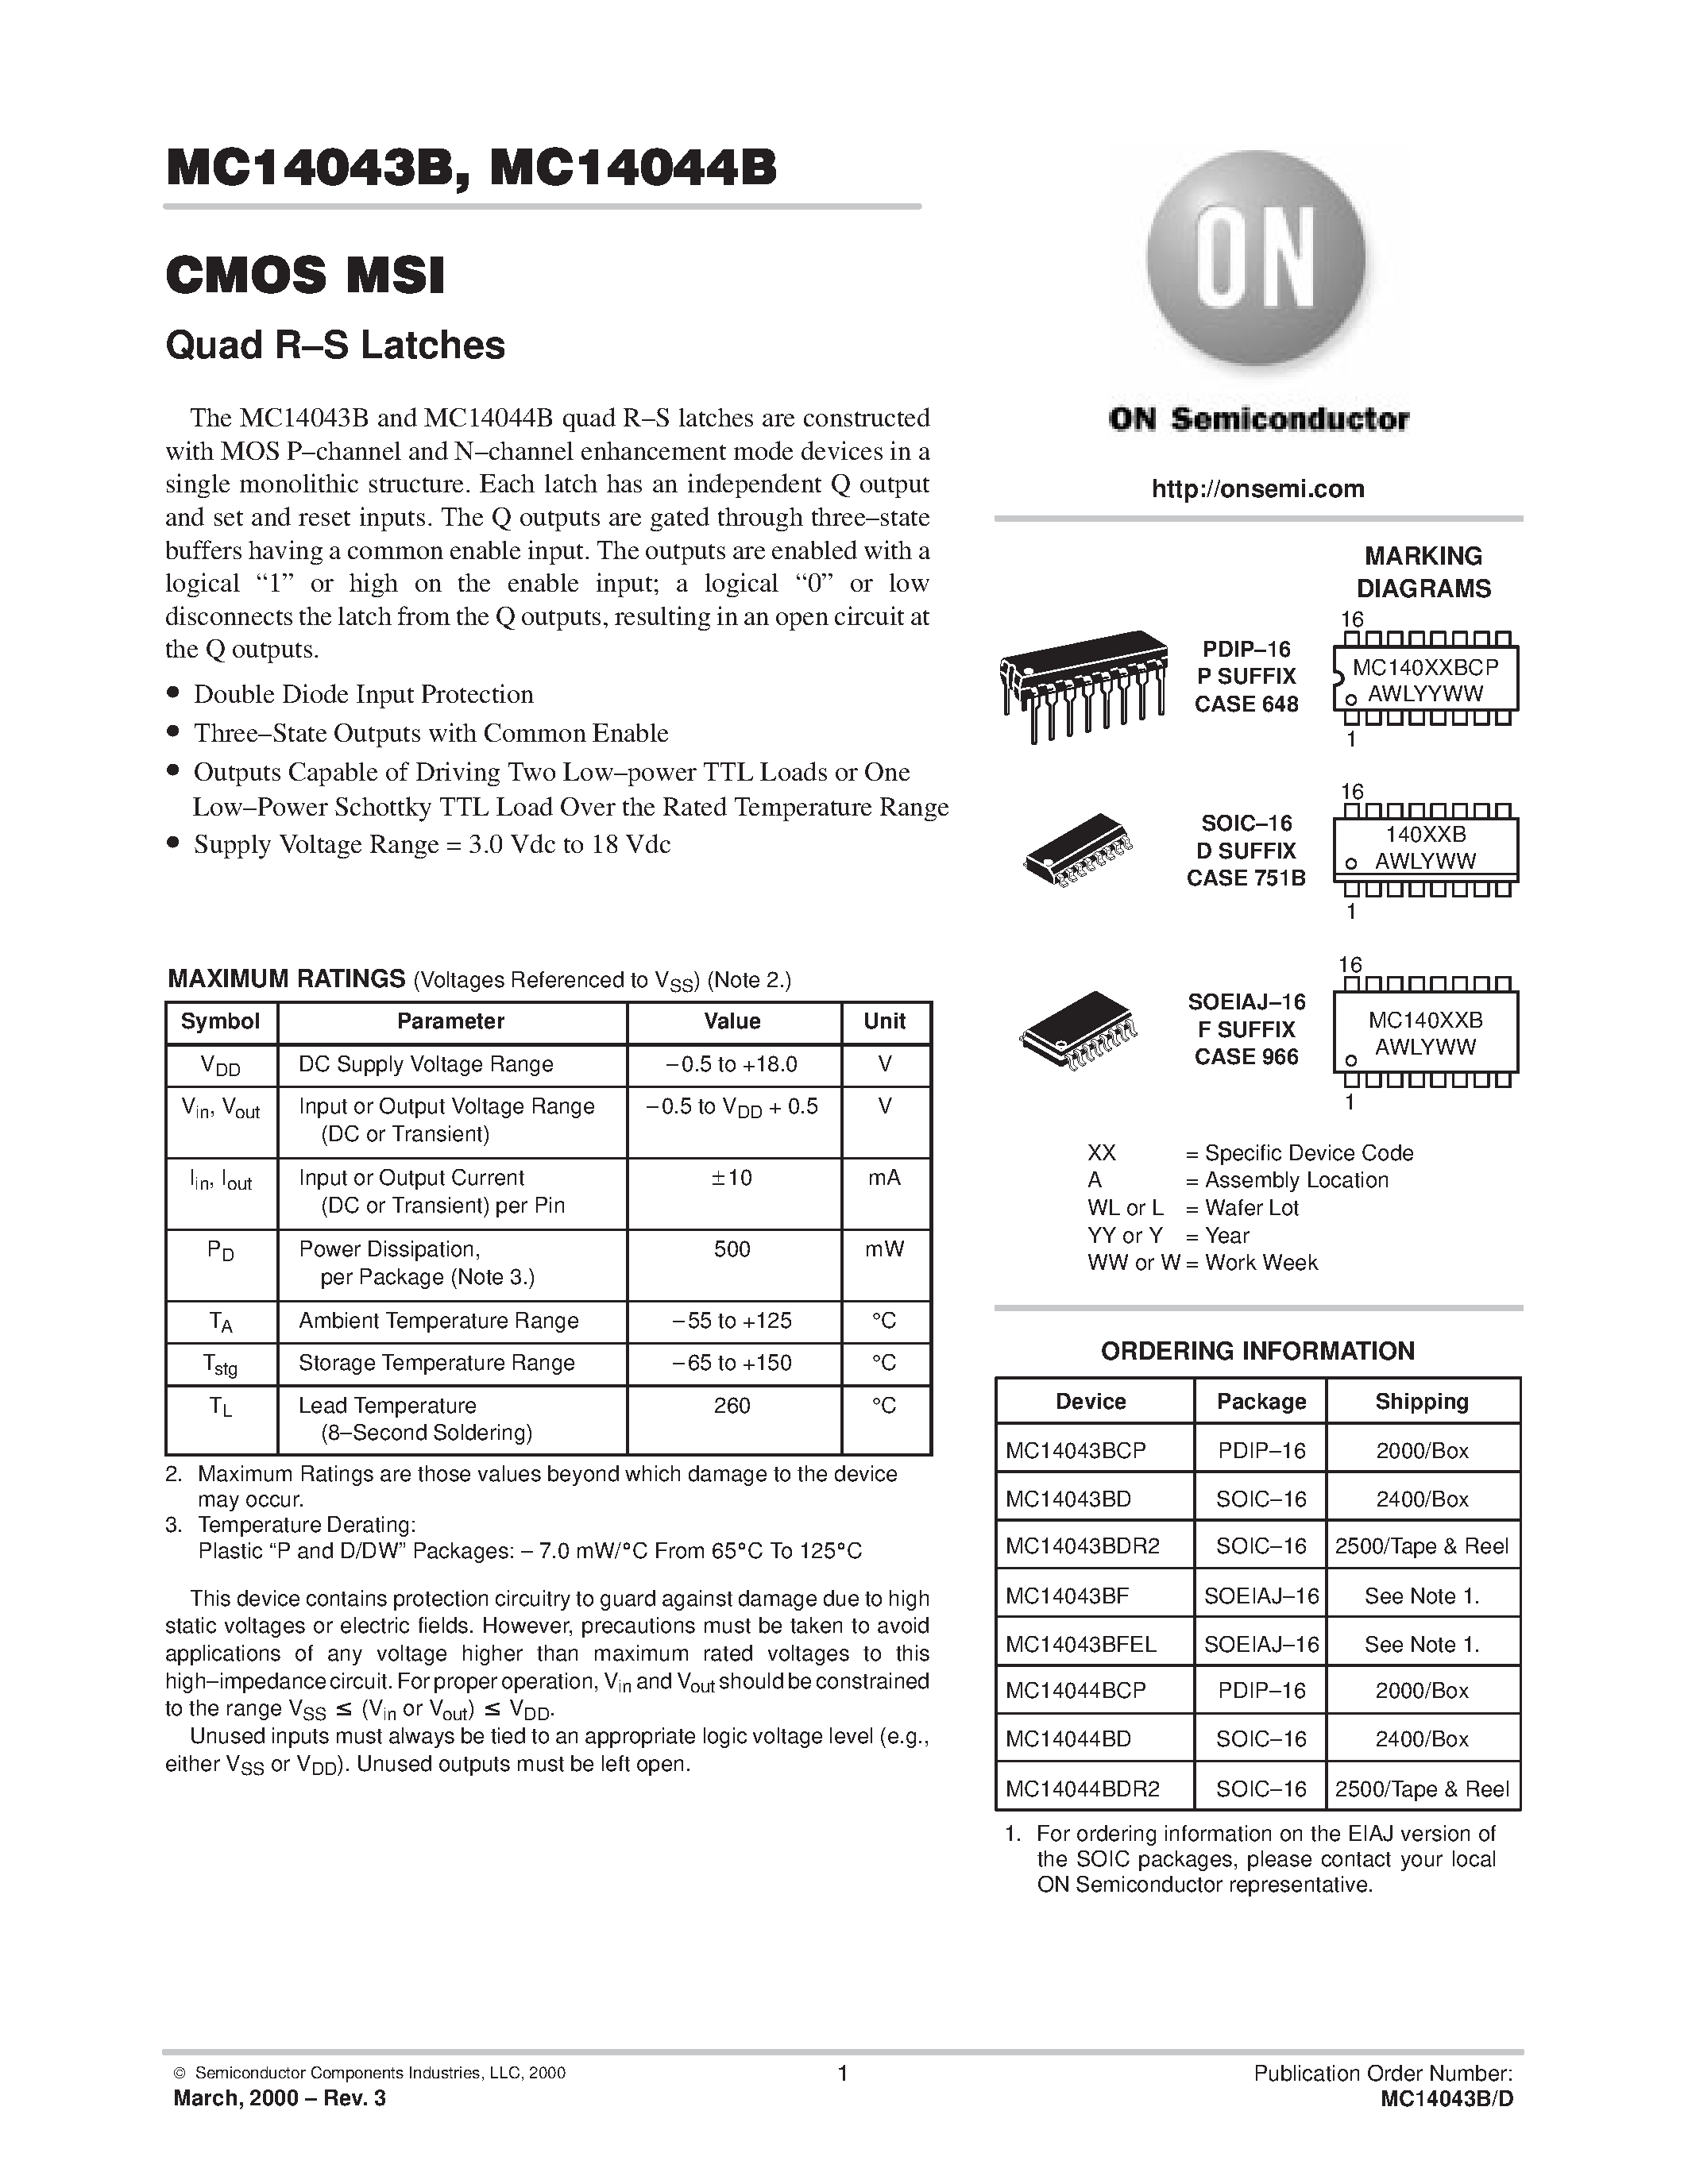 Даташит MC14043BD - CMOS MSI(Quad R-S Latches) страница 1